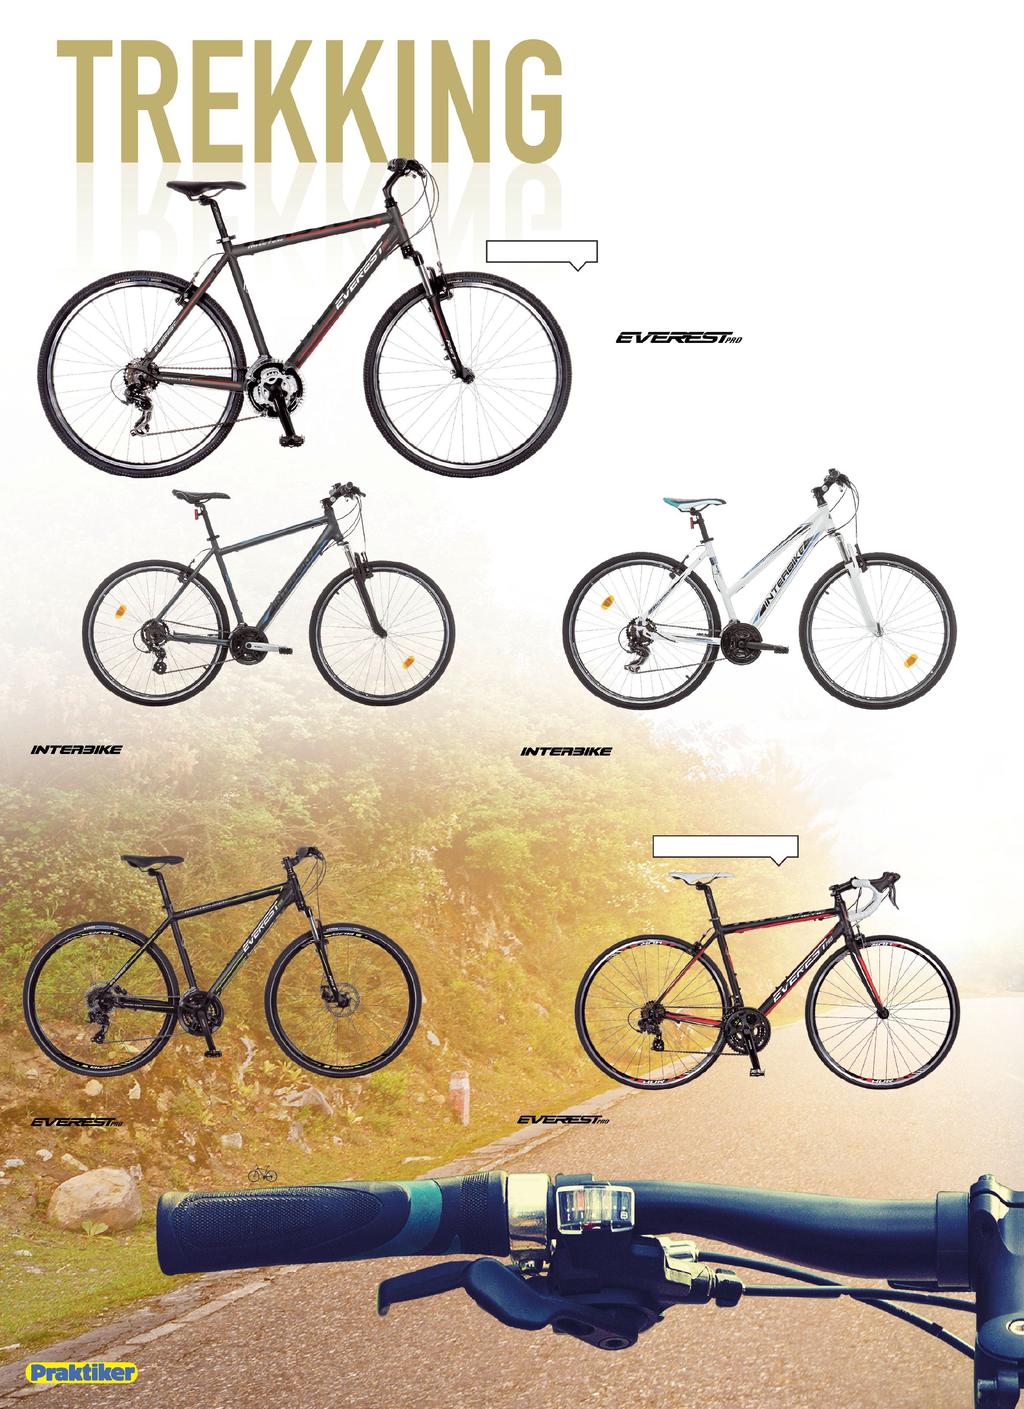 06 i Βάρος μόνο 13kg Ποδήλατο ΤREKKING MASTER 210 28 κωδ.350170 279 23,25 Ποδήλατο TREKKING SINTERO LADY 28 κωδ.361511 Ποδήλατο TREKKING SINTERO MAN 28 κωδ.